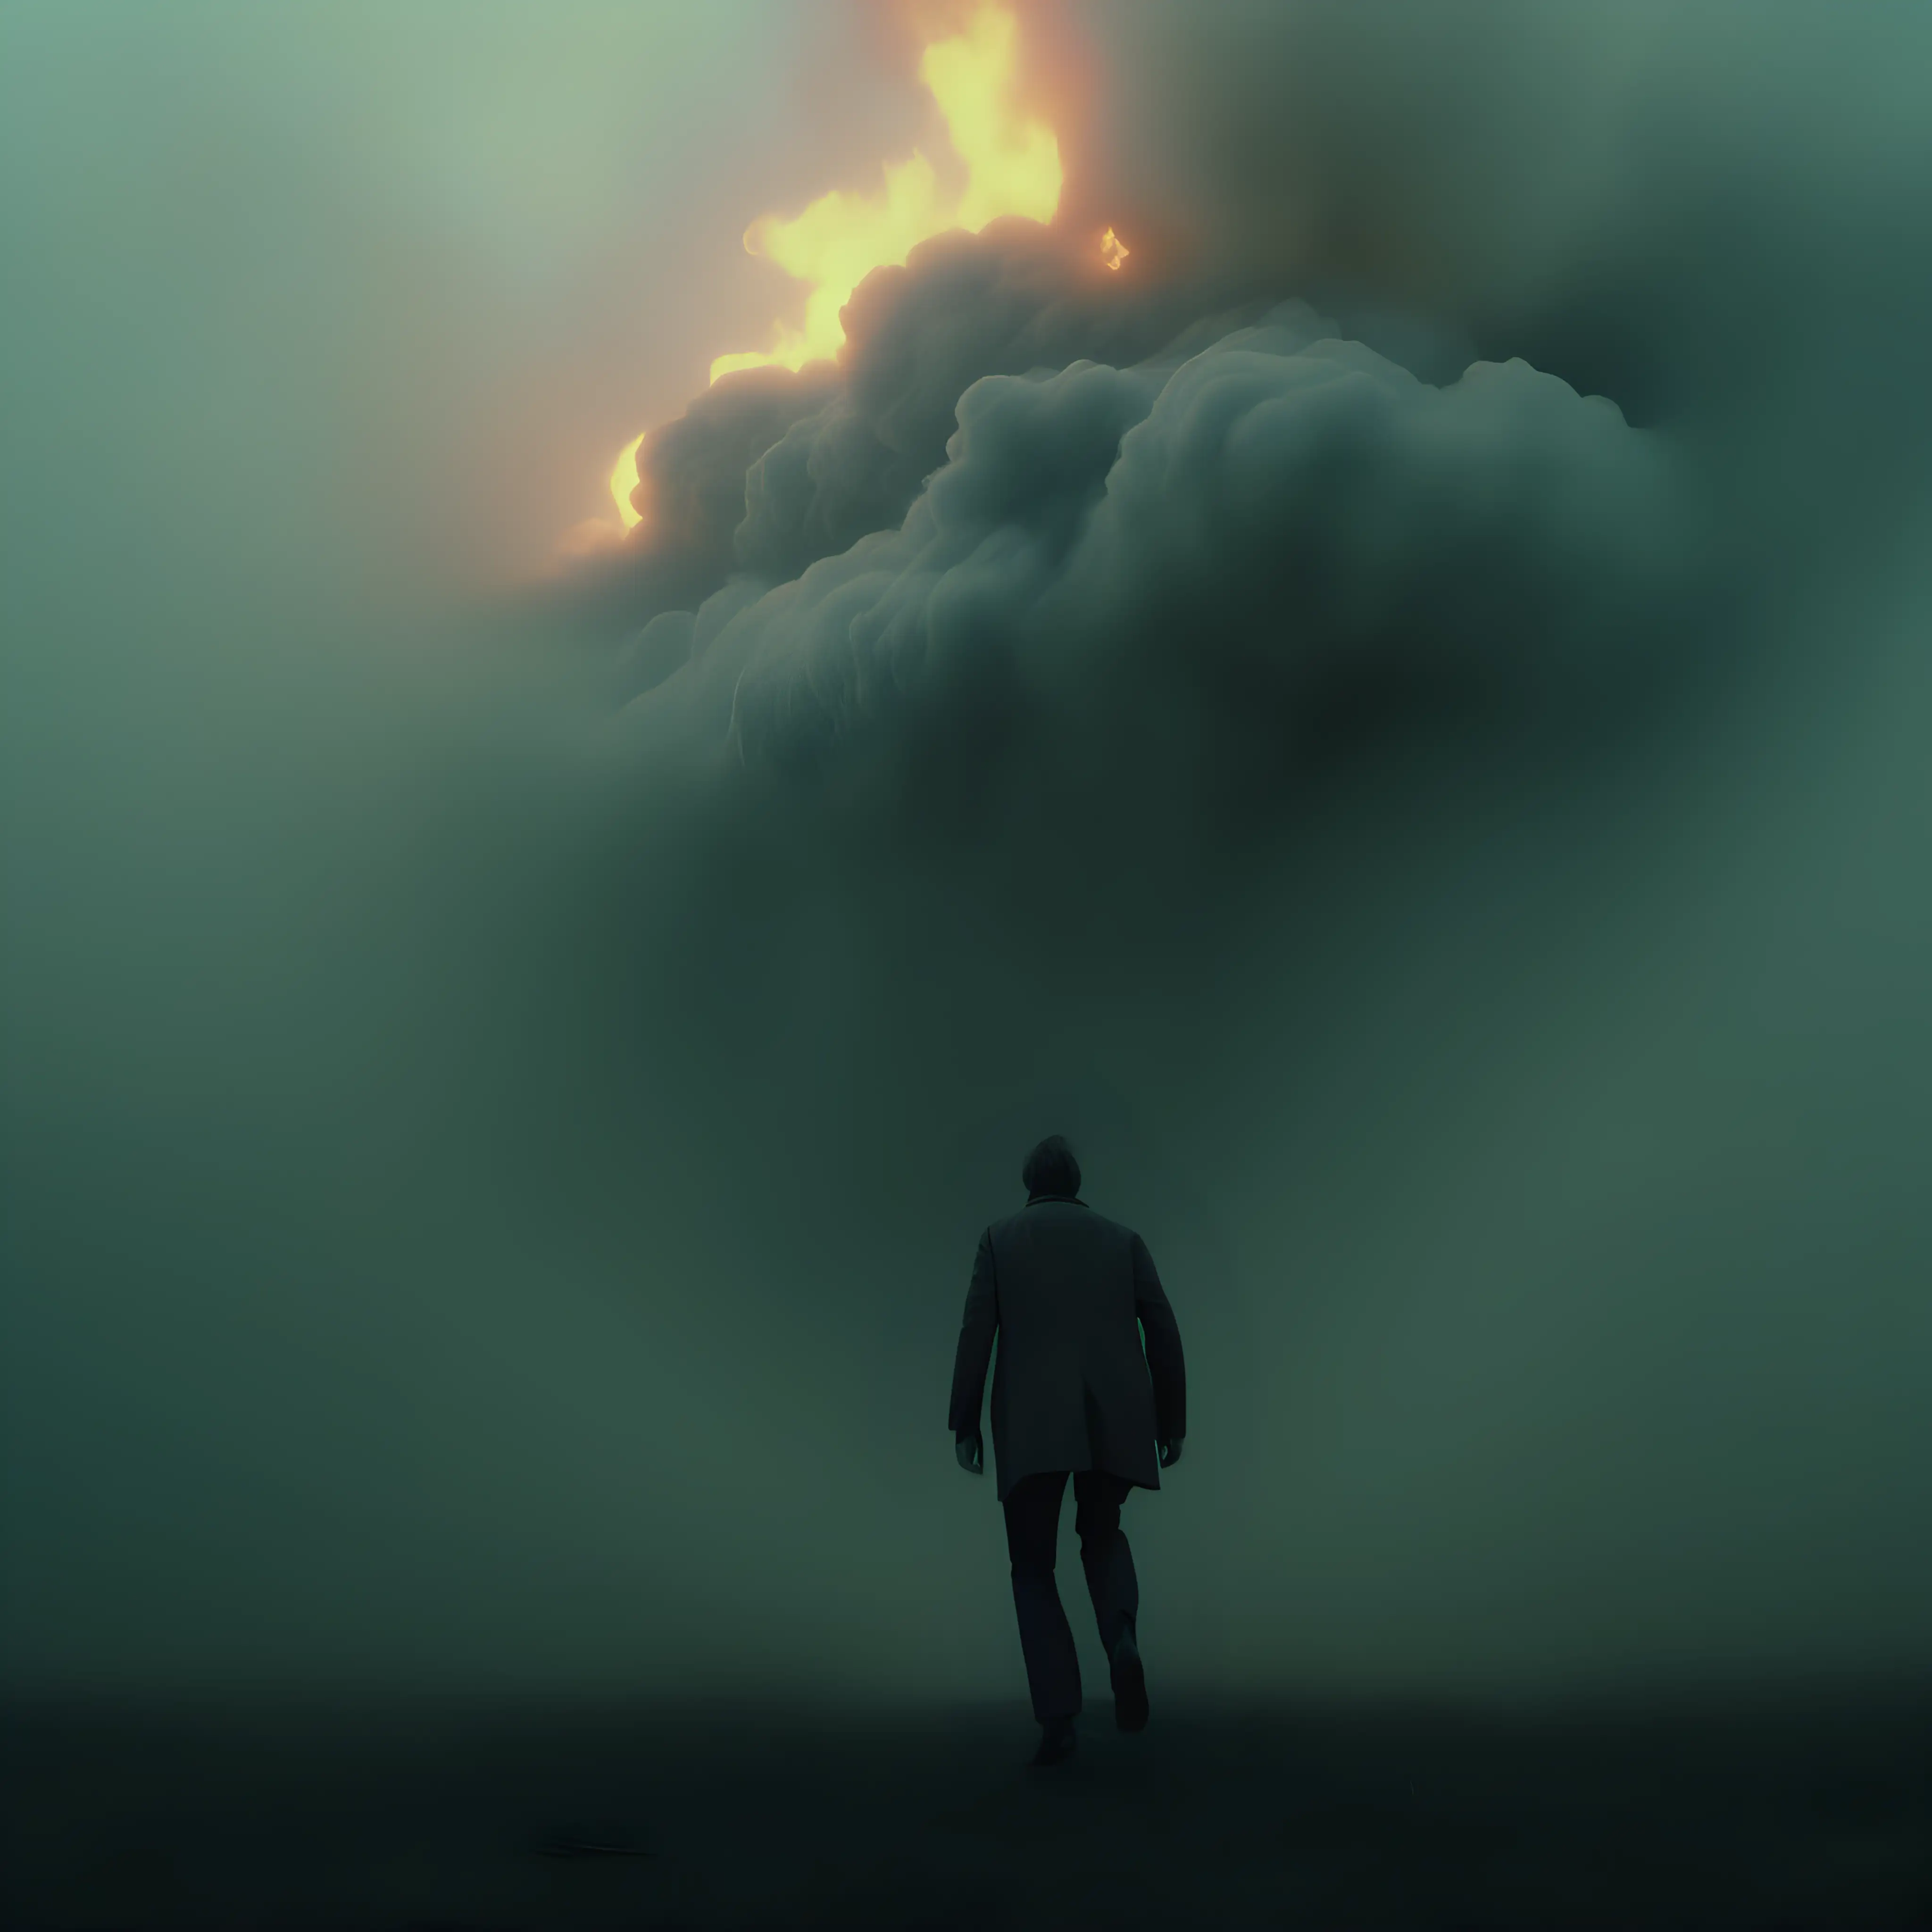 Dystopian Realism Man Falling from Burning Sky in Foggy Landscape